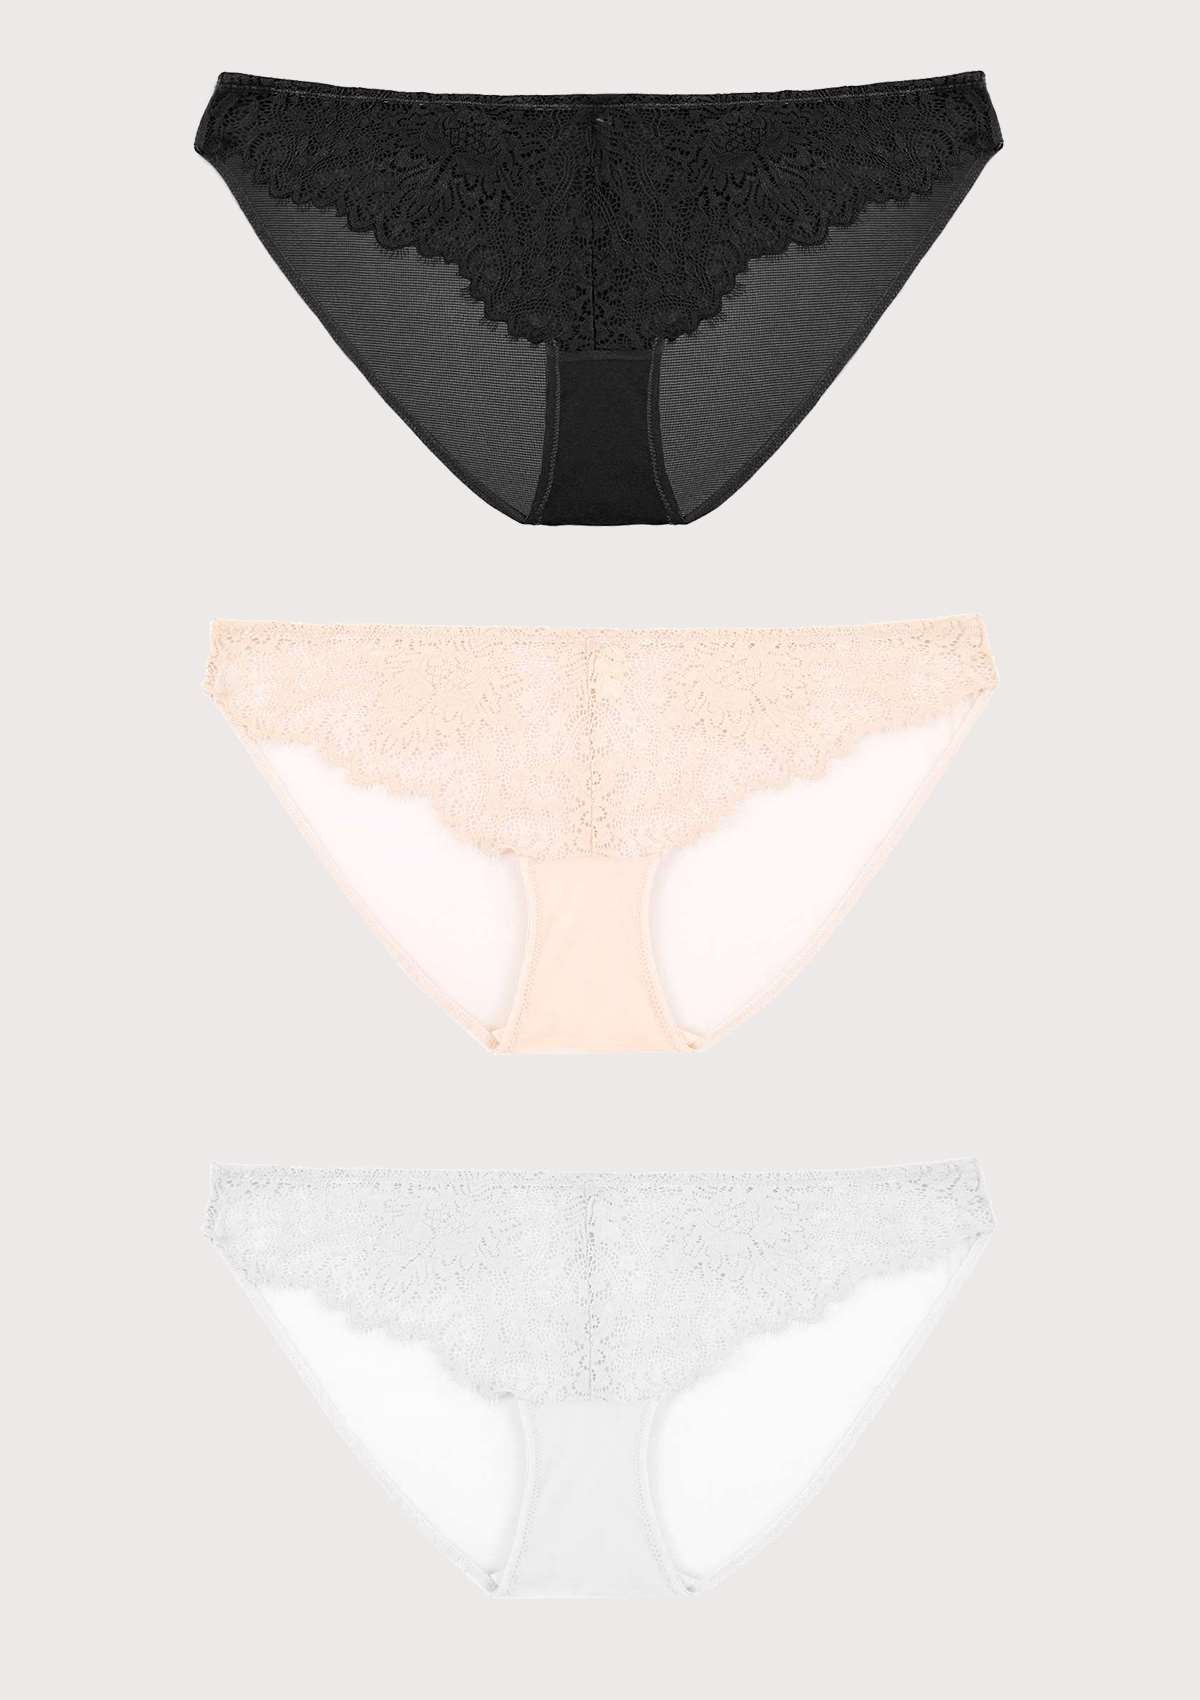 HSIA Sunflower Exquisite Lighweight Soft Lace Bikini Panties 3 Pack - M / Black+White+Pink